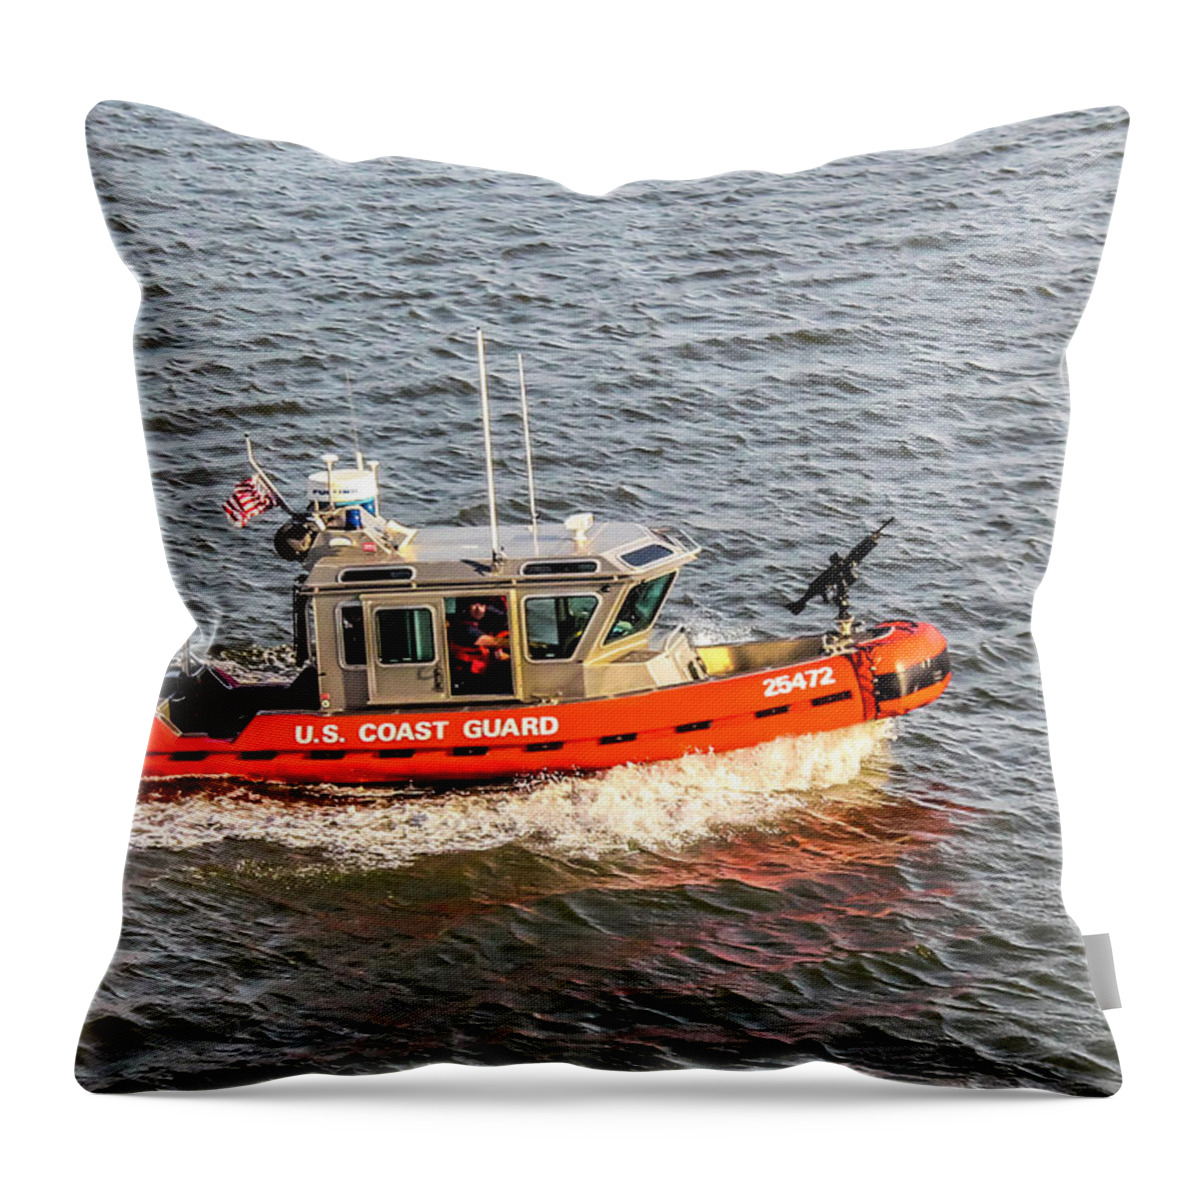 U.s. Coast Guard Throw Pillow featuring the photograph U.S. Coast Guard Defender Boat 25472 by Pheasant Run Gallery